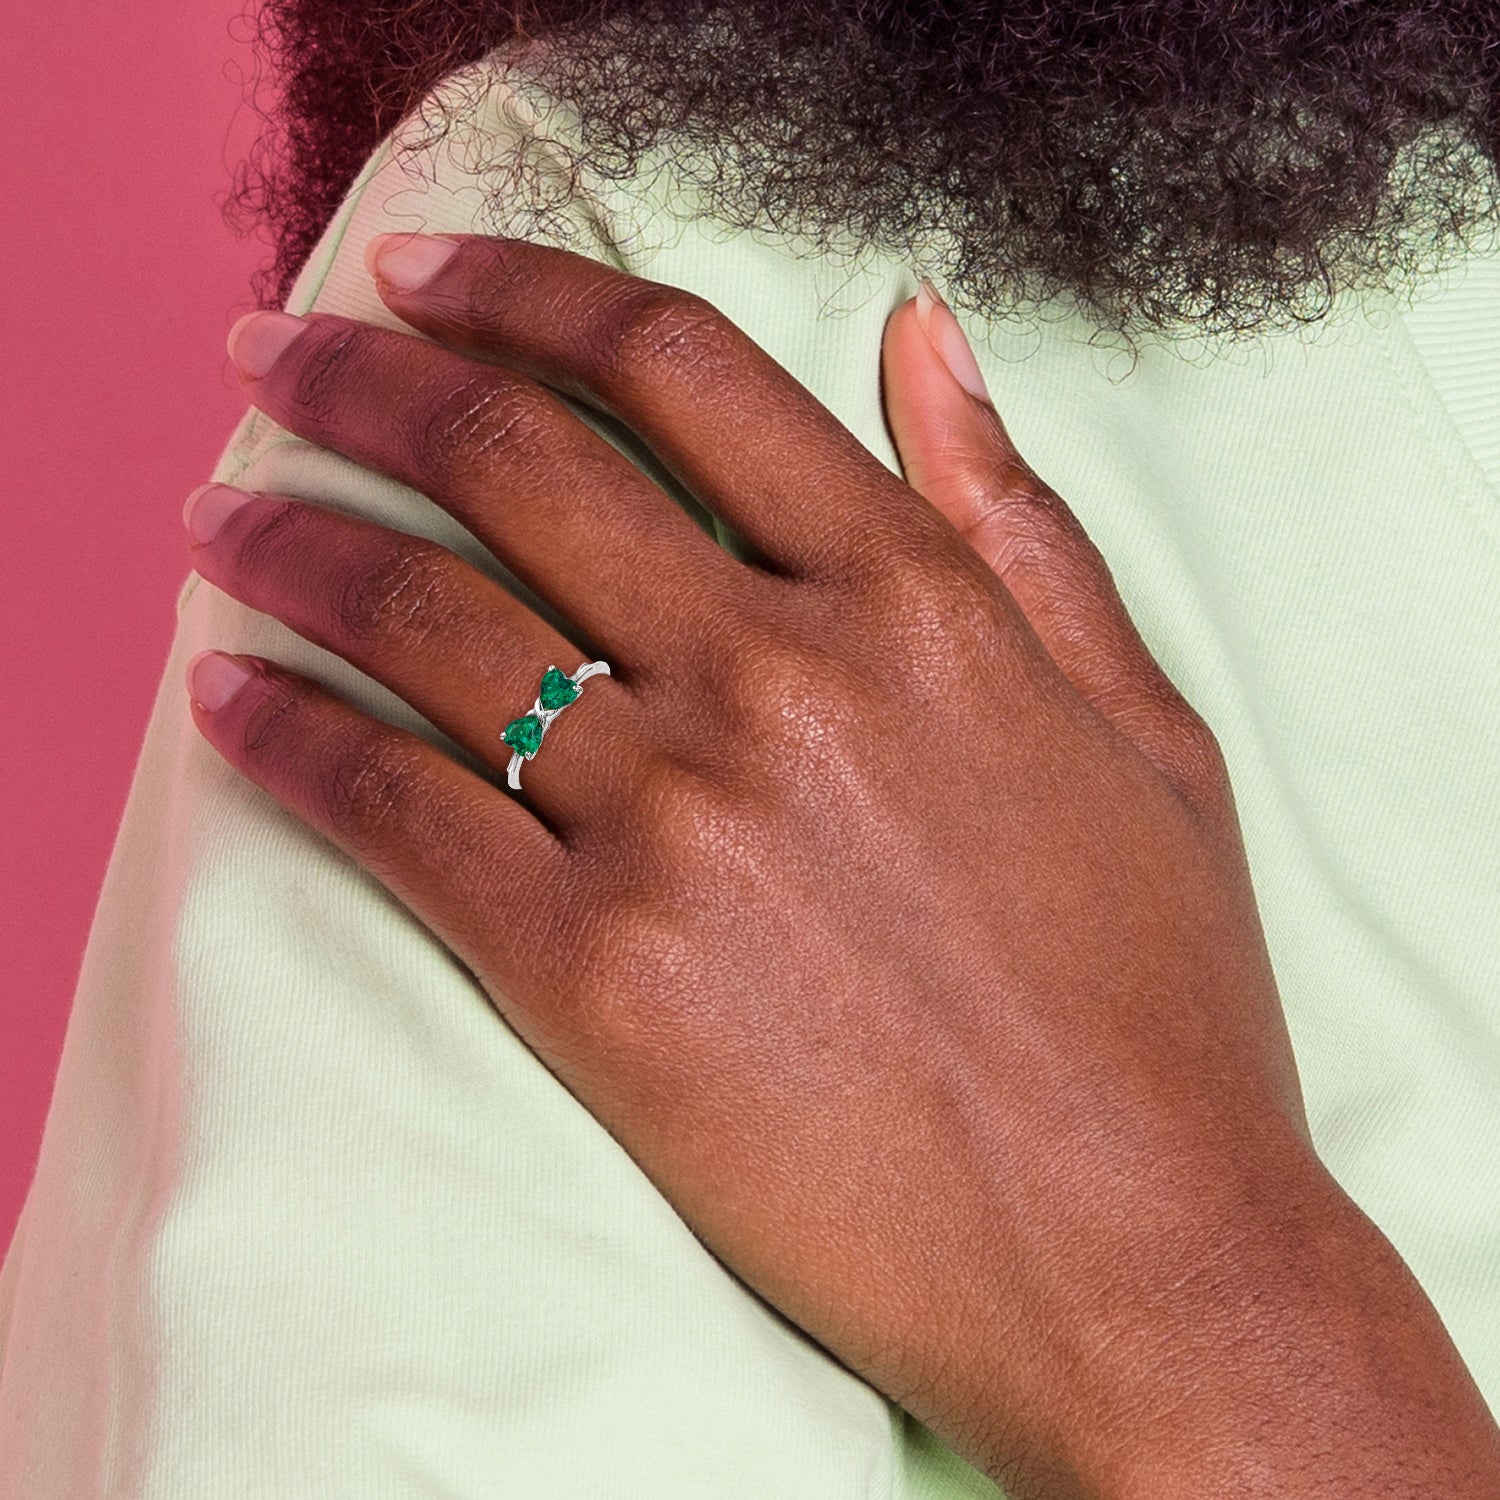 14k White Gold Polished Created Emerald Bow Ring